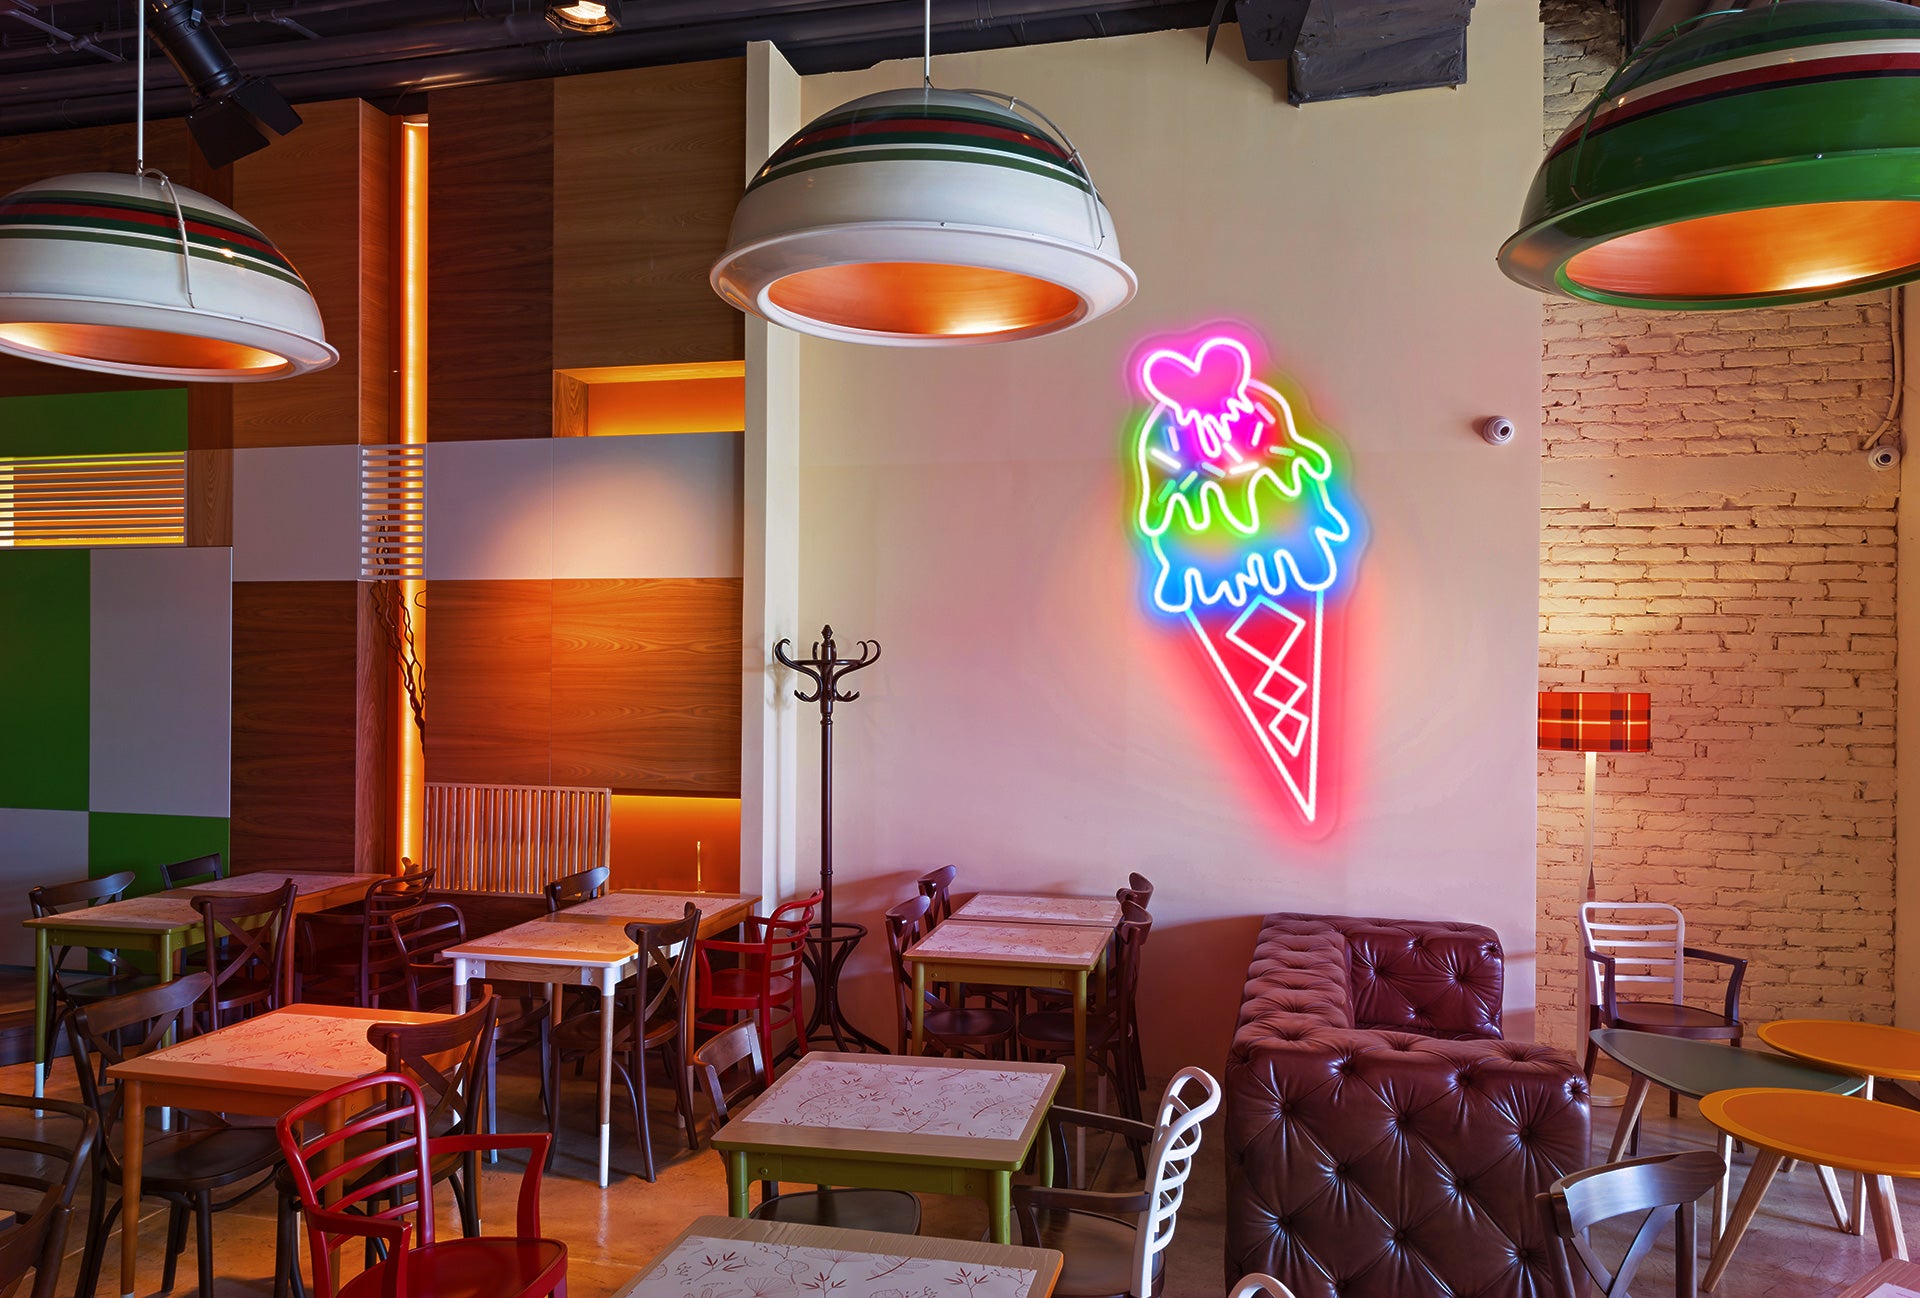 Colourful ice cream neon sign